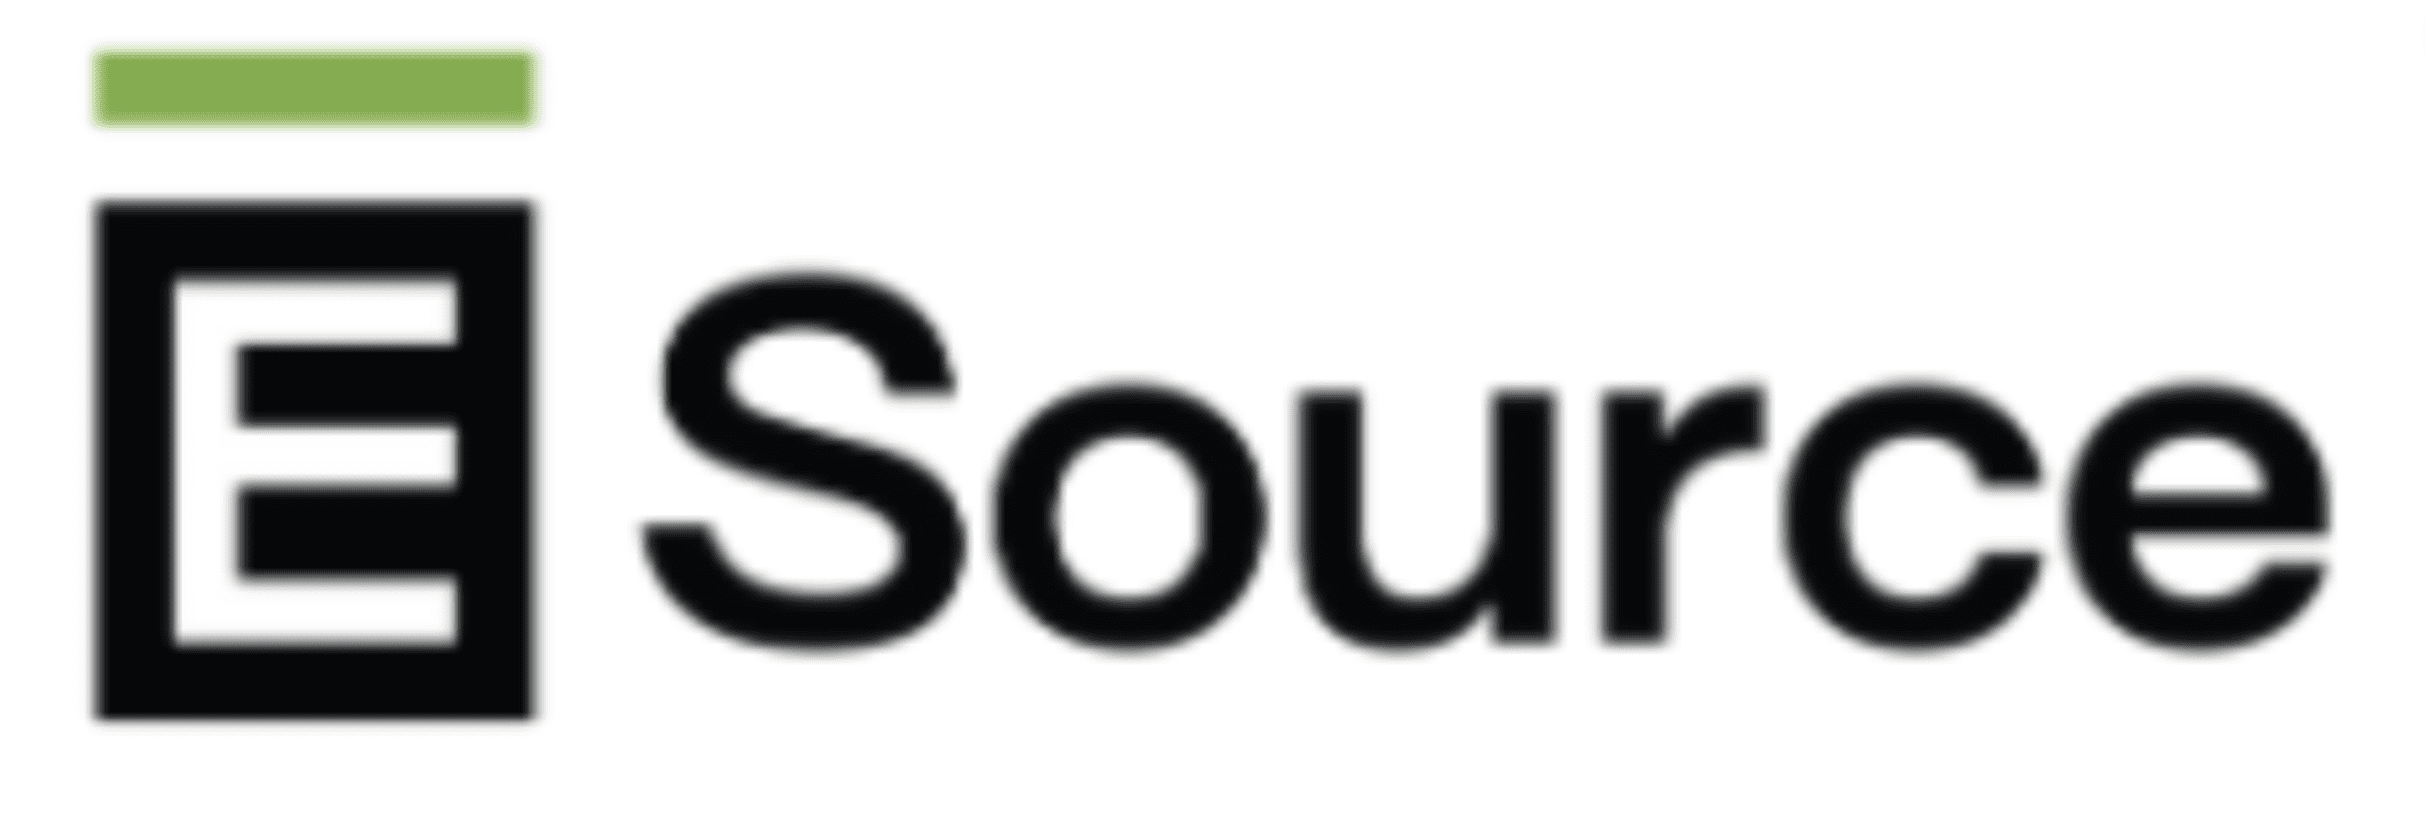 ESource logo